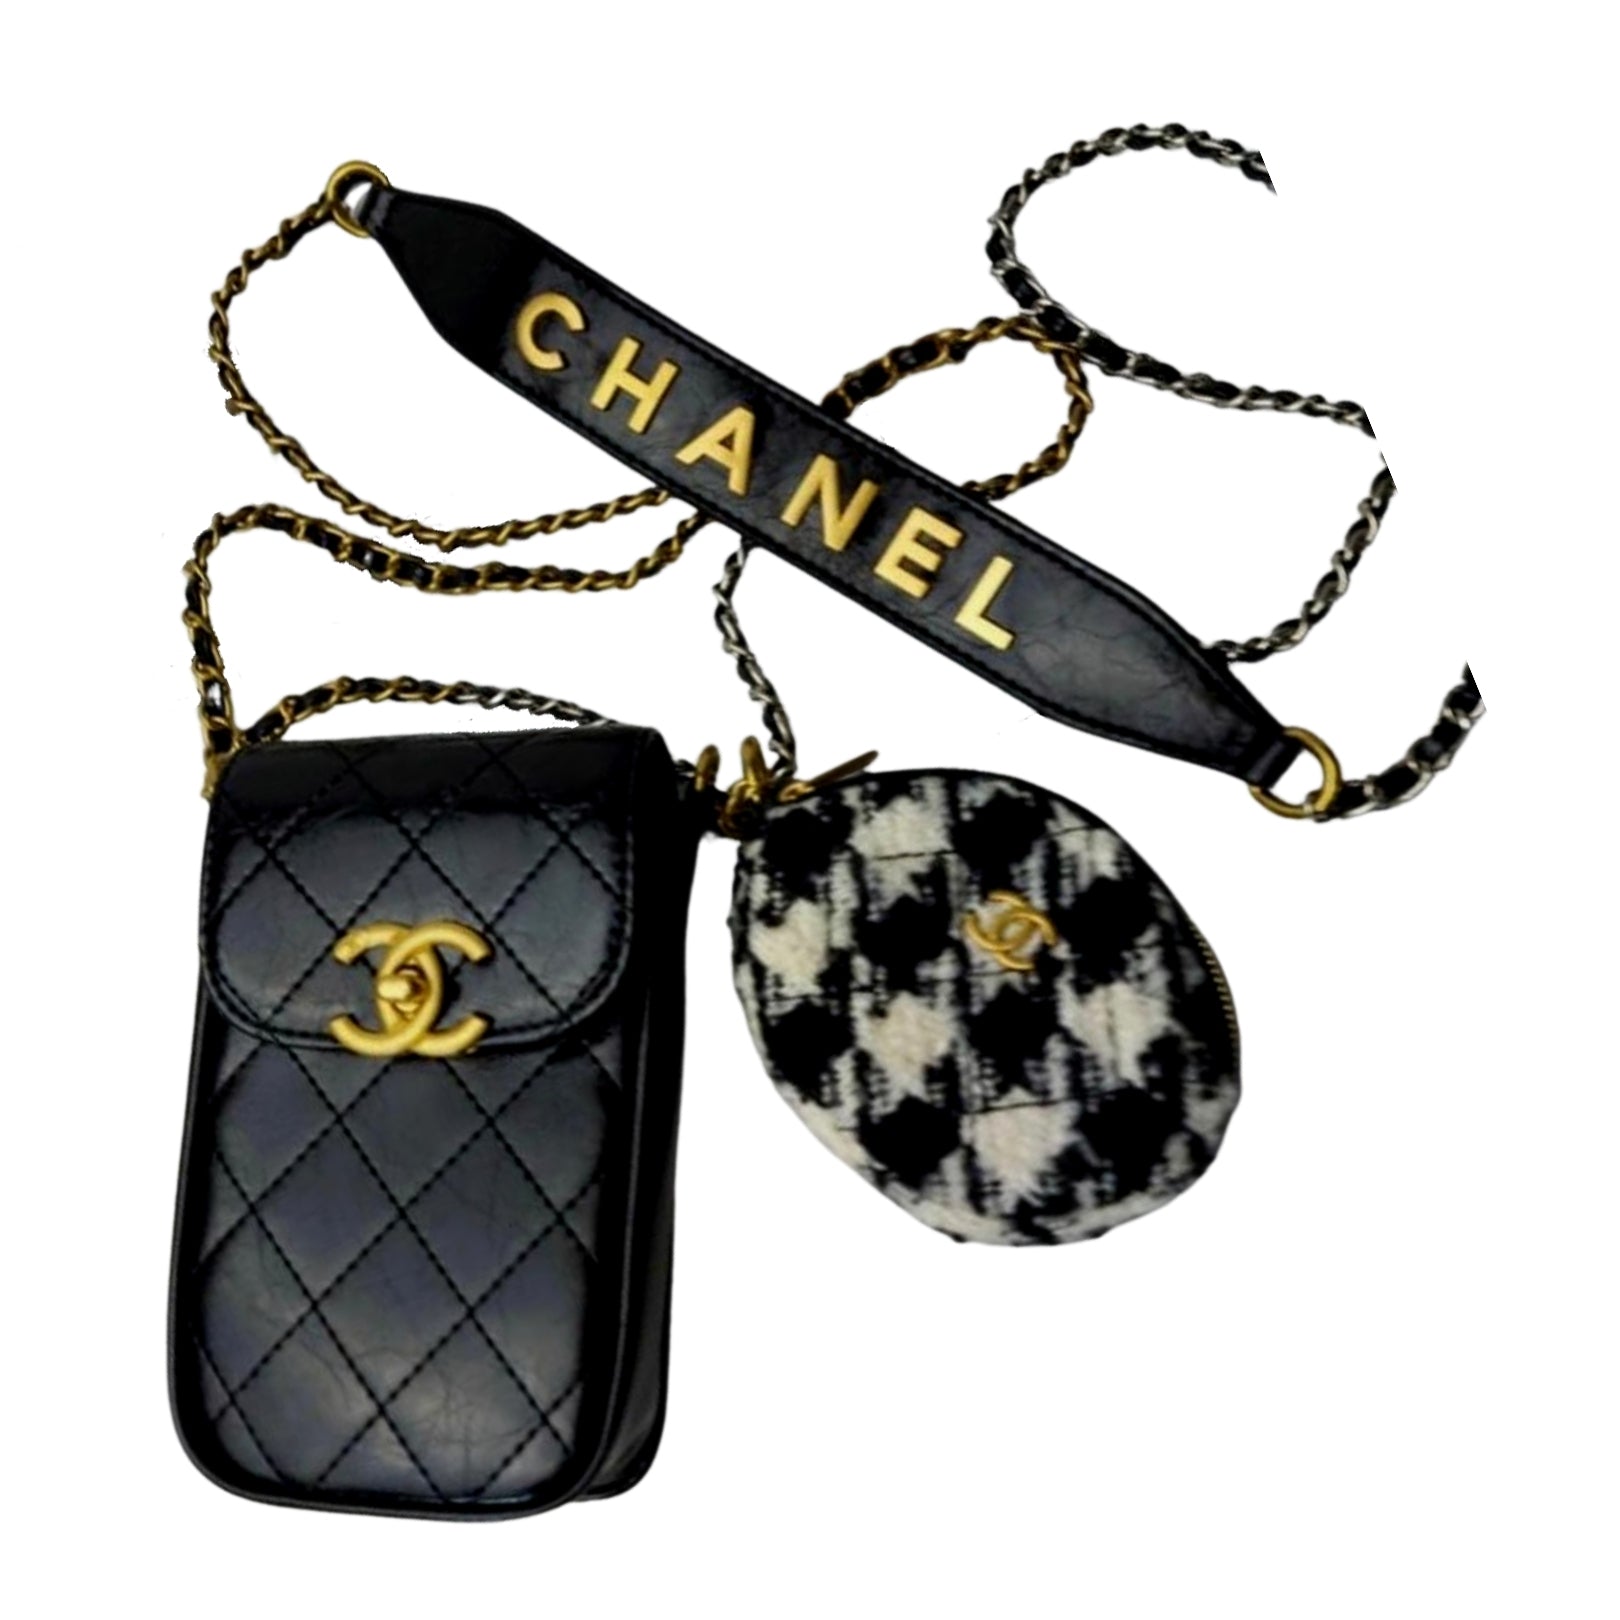 Chanel Beauty VIP Xmas Gift Cosmetic Clutch / Pouch Bag Handbag